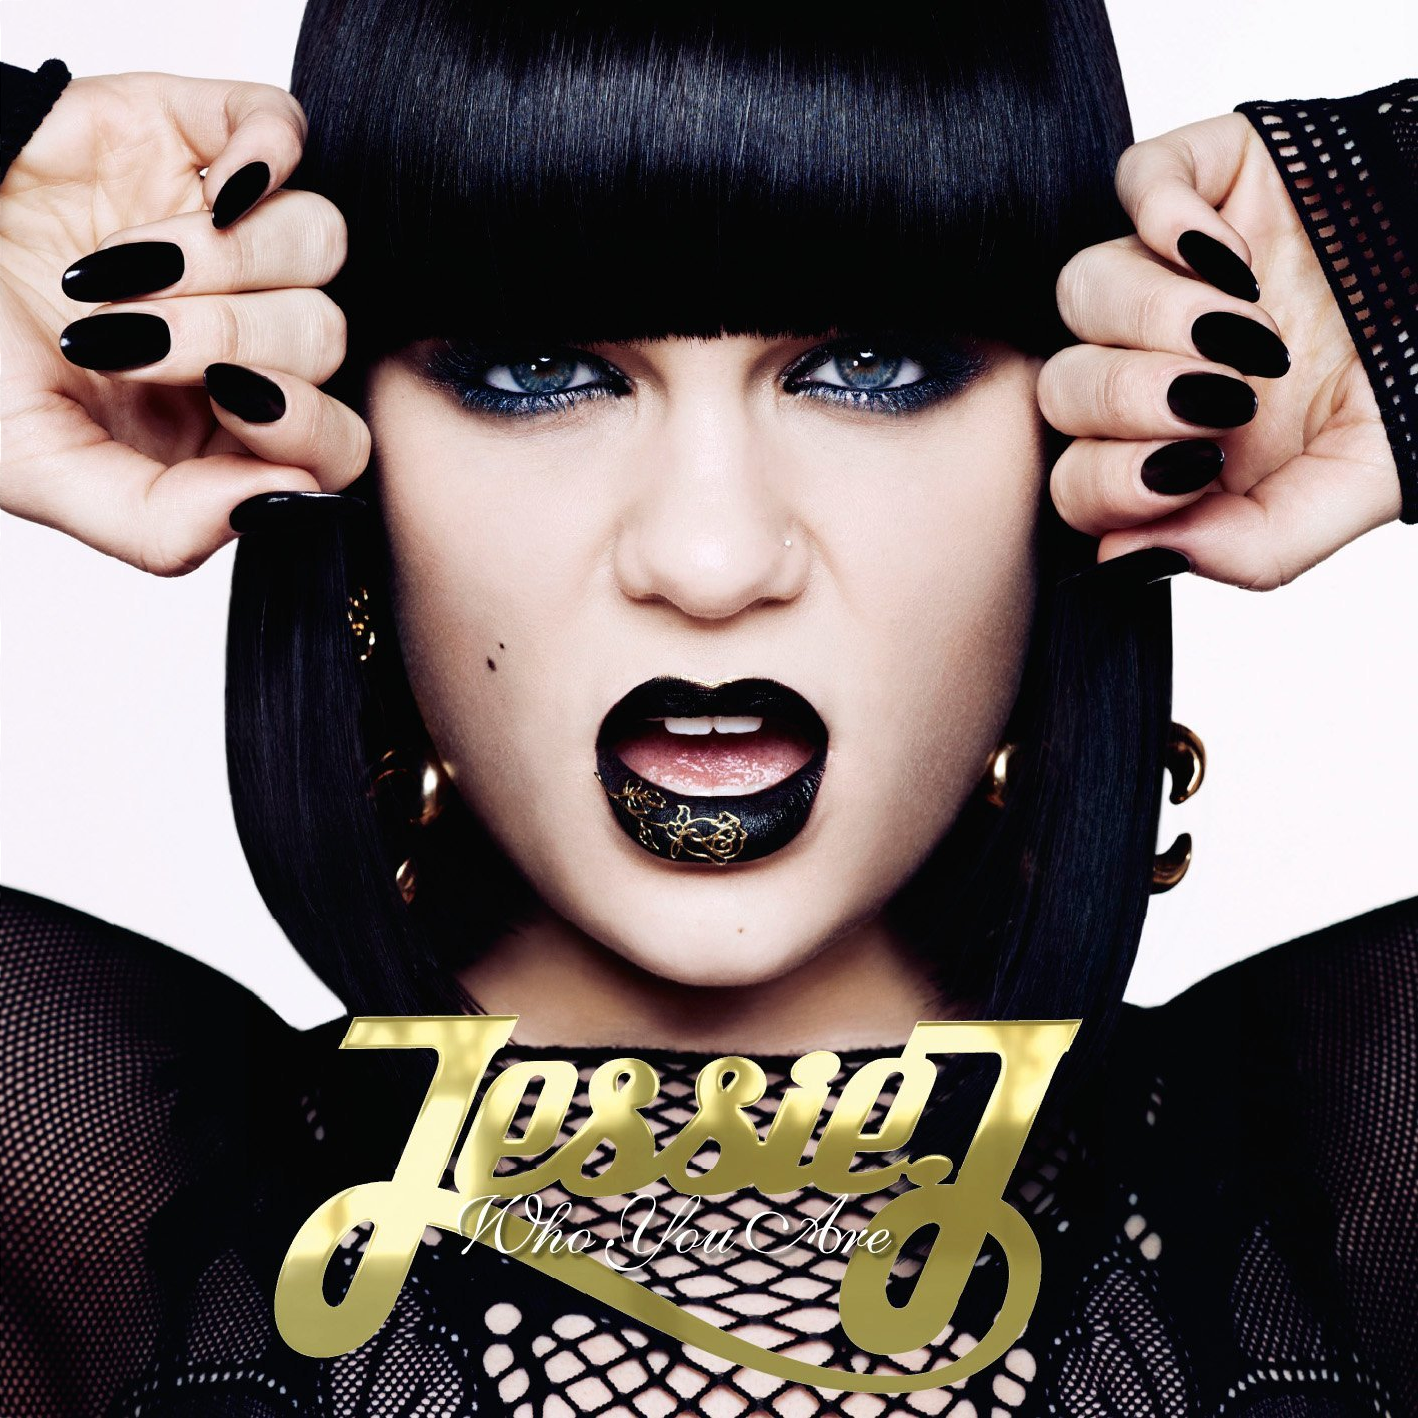 http://3.bp.blogspot.com/-6VFXAtTFUPk/TWtVyB-1ePI/AAAAAAAACt0/AEX9Qy71UCs/s1600/Jessie-J-Who-You-Are-Official-Album-Cover.png